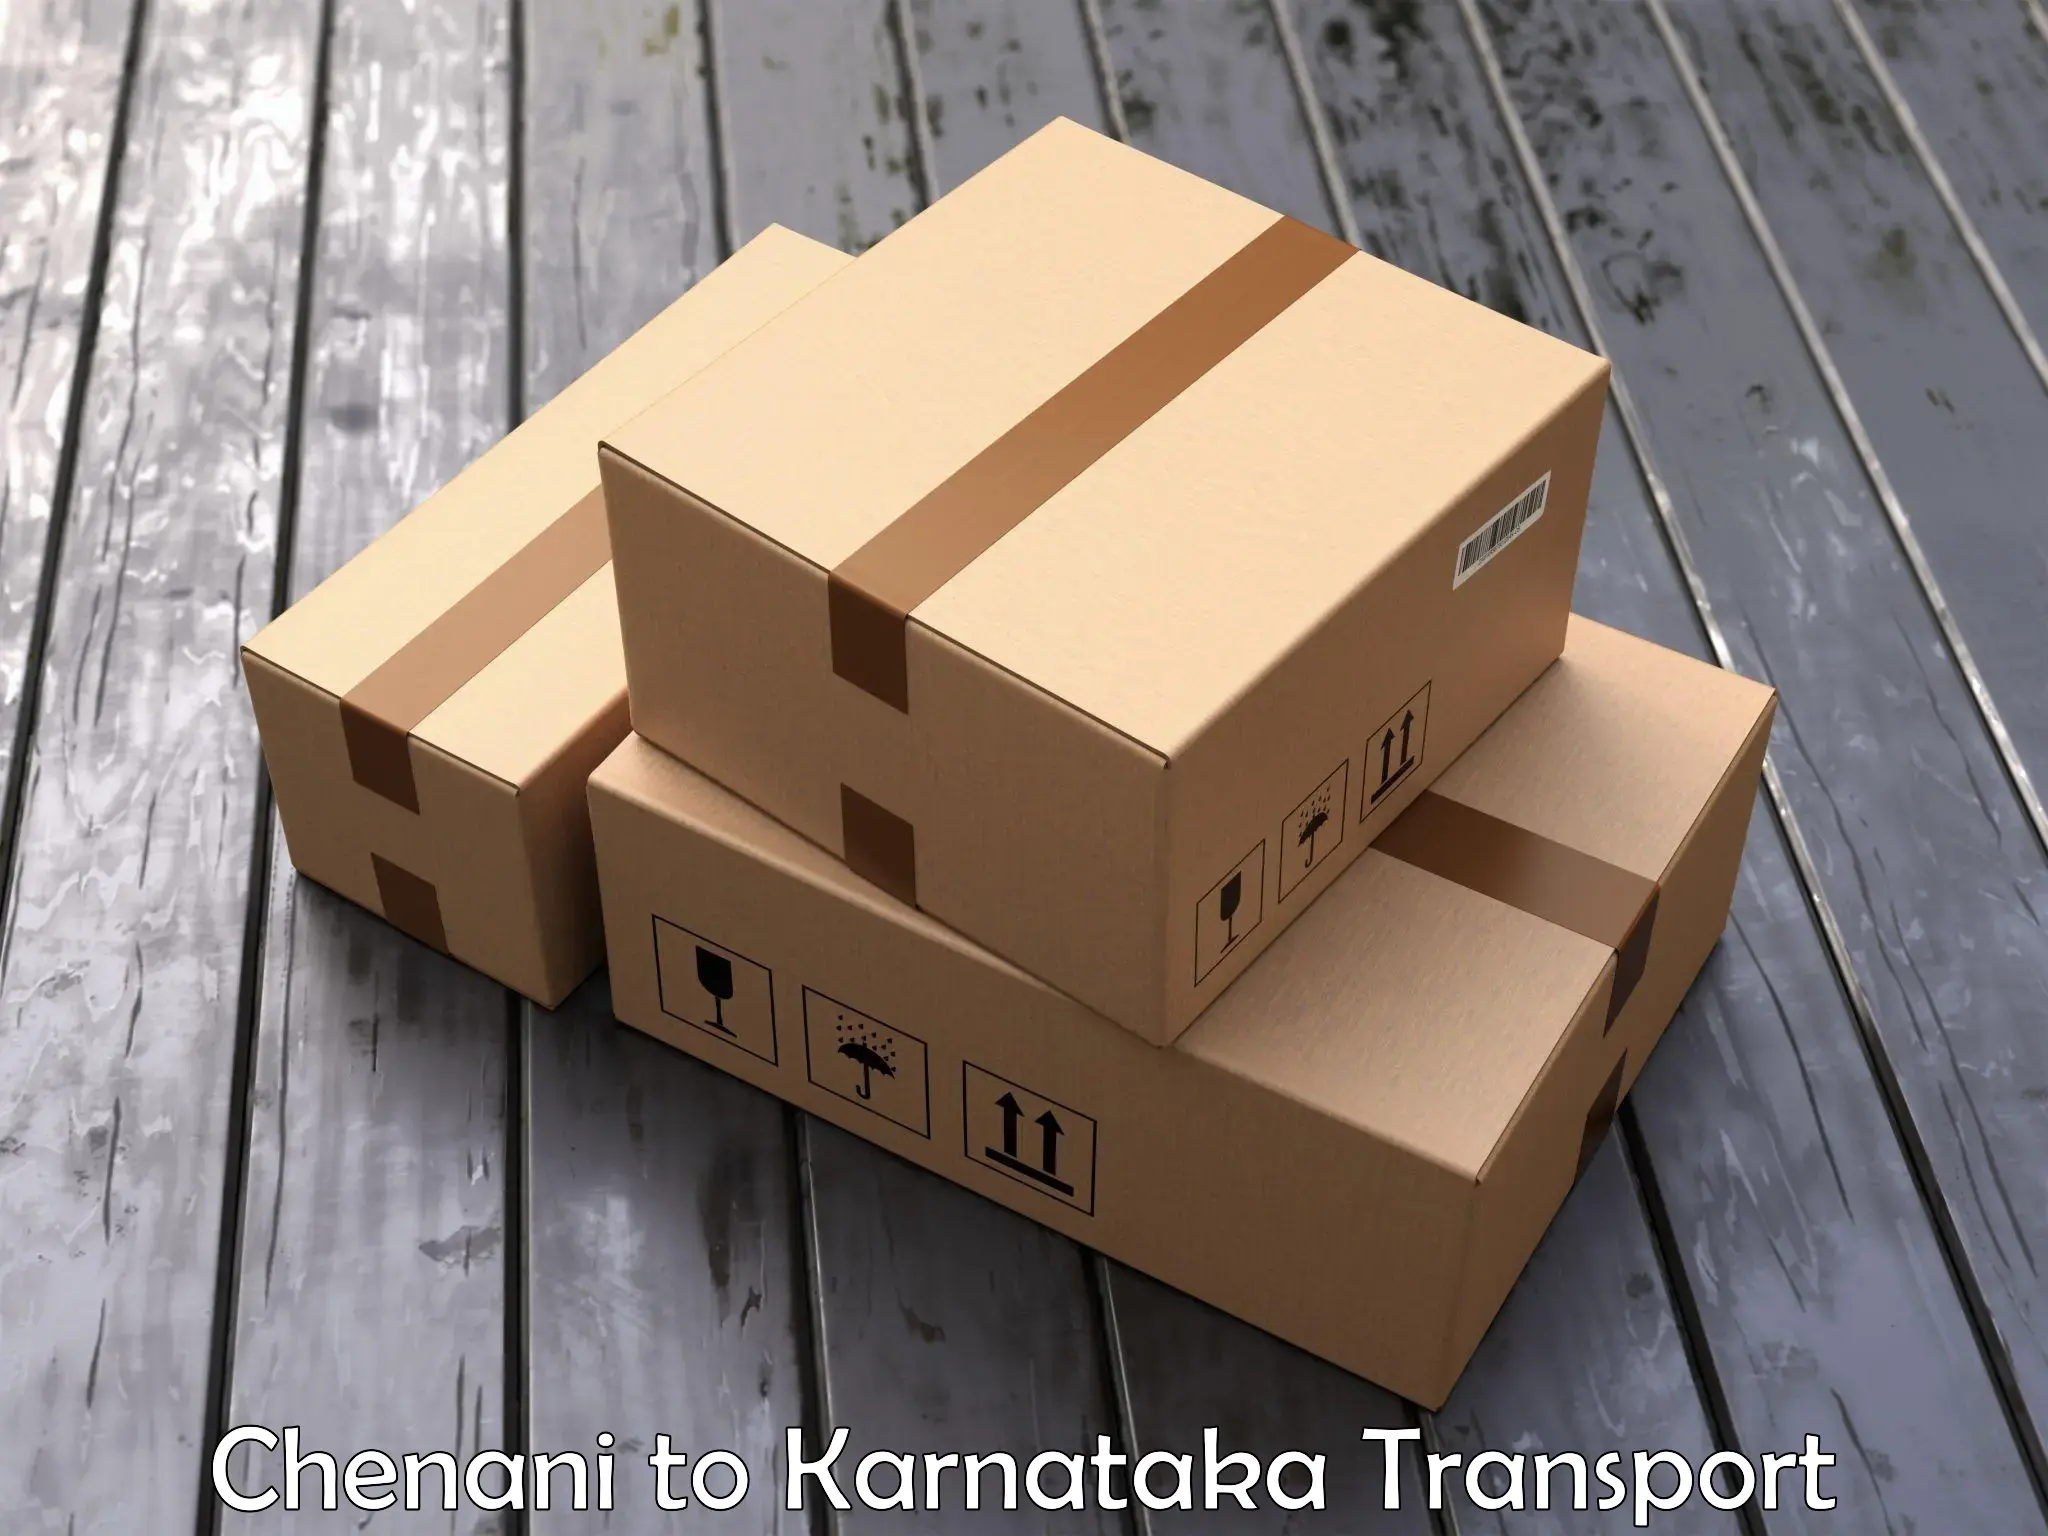 Truck transport companies in India Chenani to Karnataka